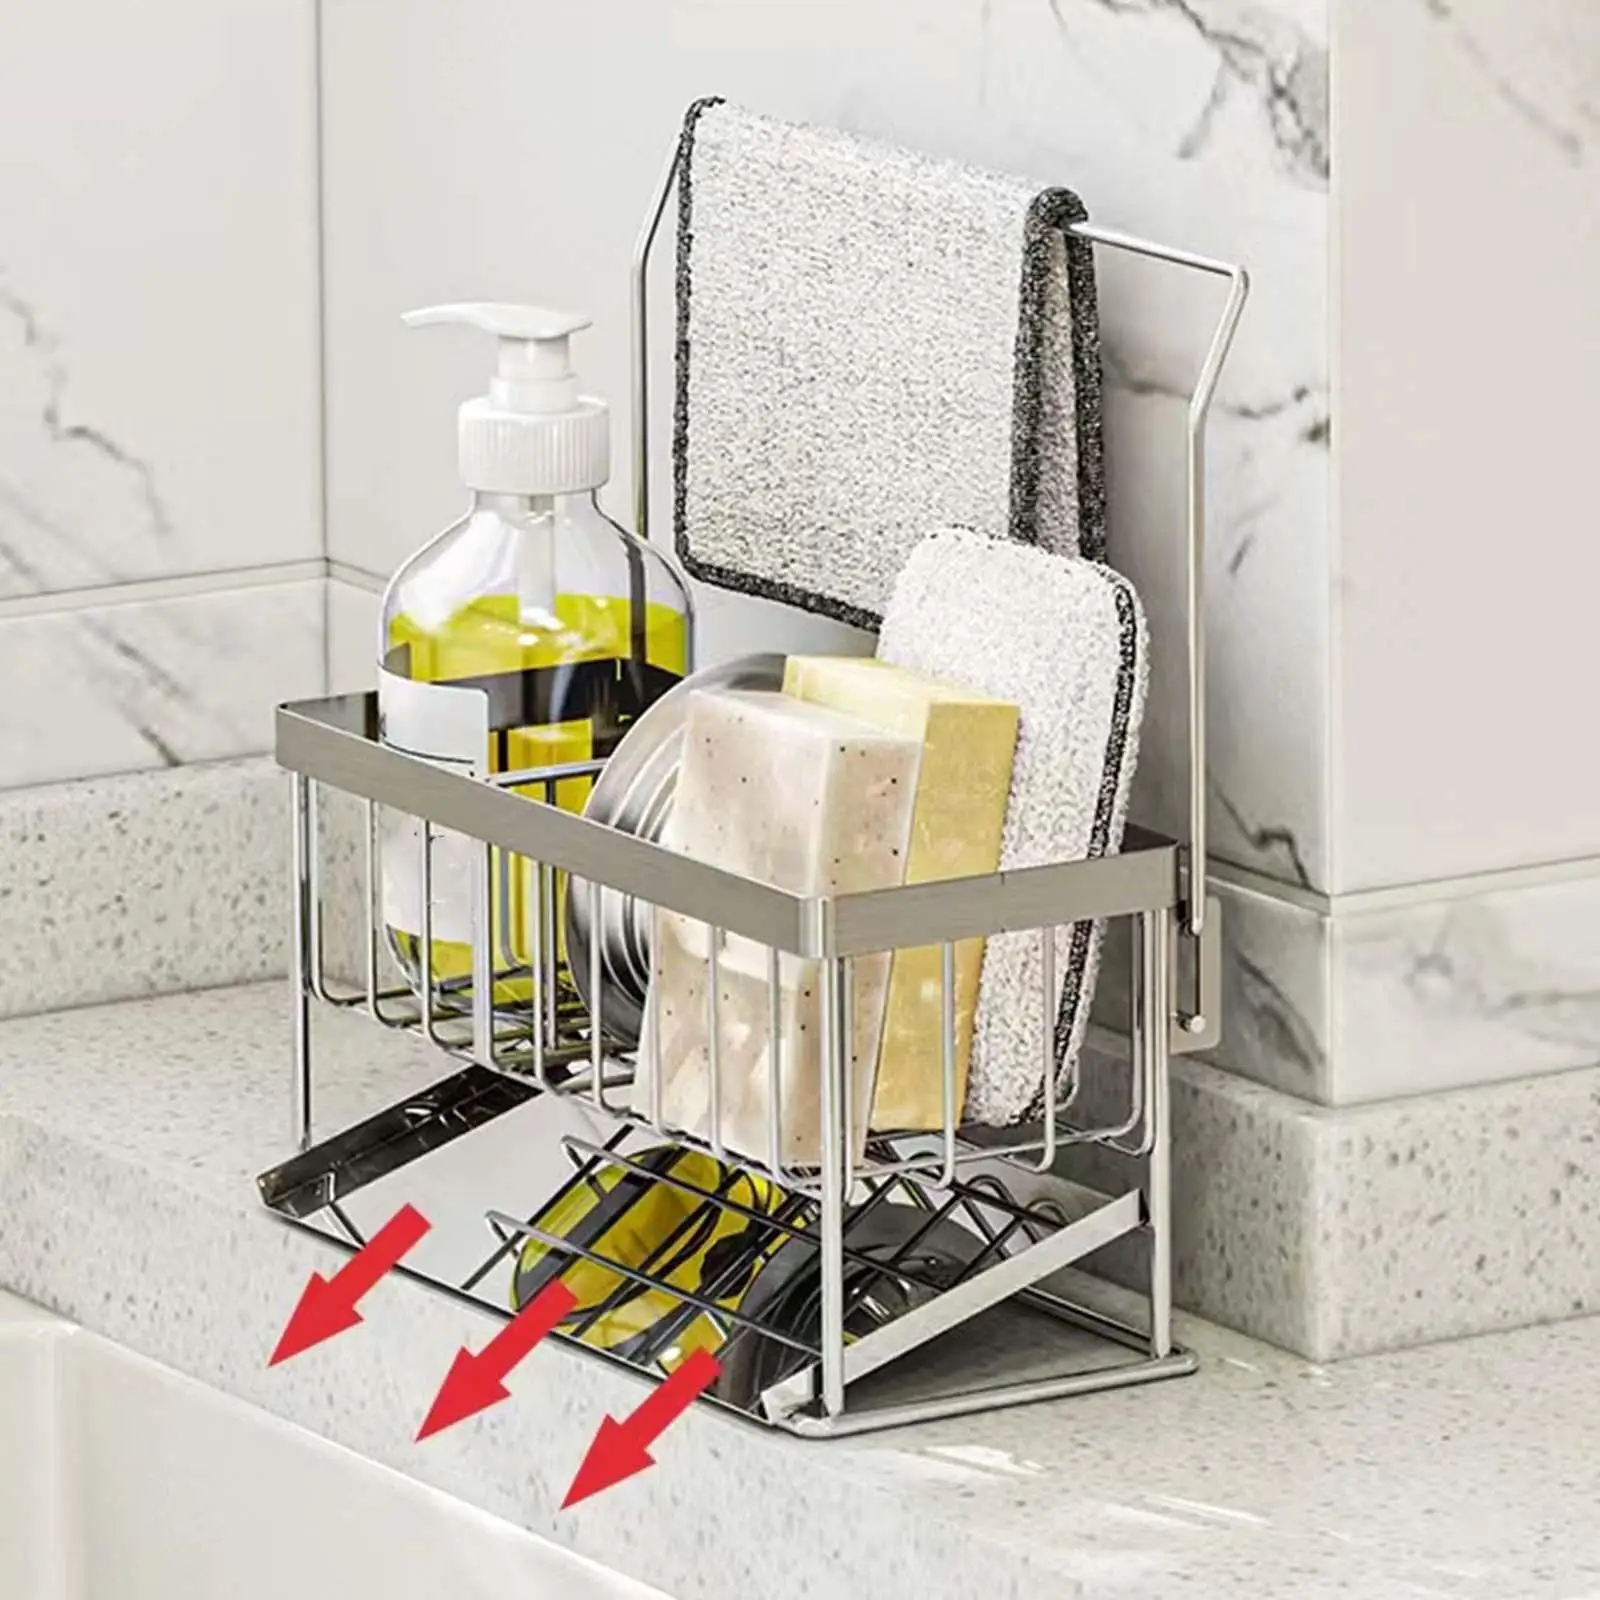 Durable Sink Drain Rack Drainer Basket Dishcloth Shelf Organization Rustproof Storage Kitchen Sponge Holder for Counter Bathroom